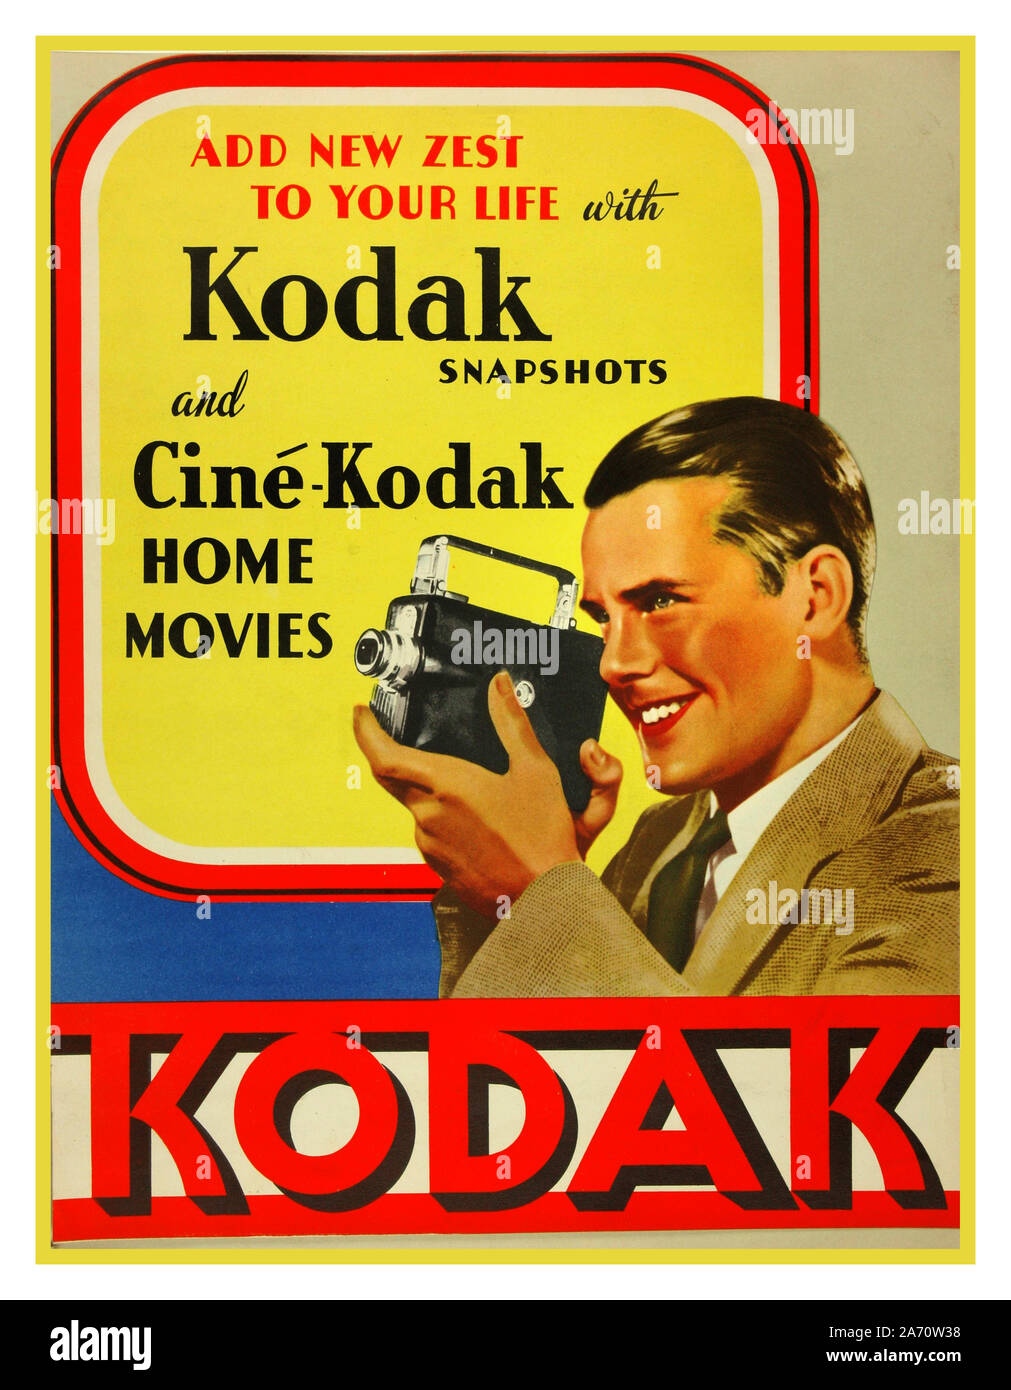 KODAK Historic 1920’s home movies retro Kodak Cine Movie 1900's vintage advertisement poster for legendary Ciné-Kodak 8mm home movies and Kodak snapshots 'add new zest to your life' Stock Photo